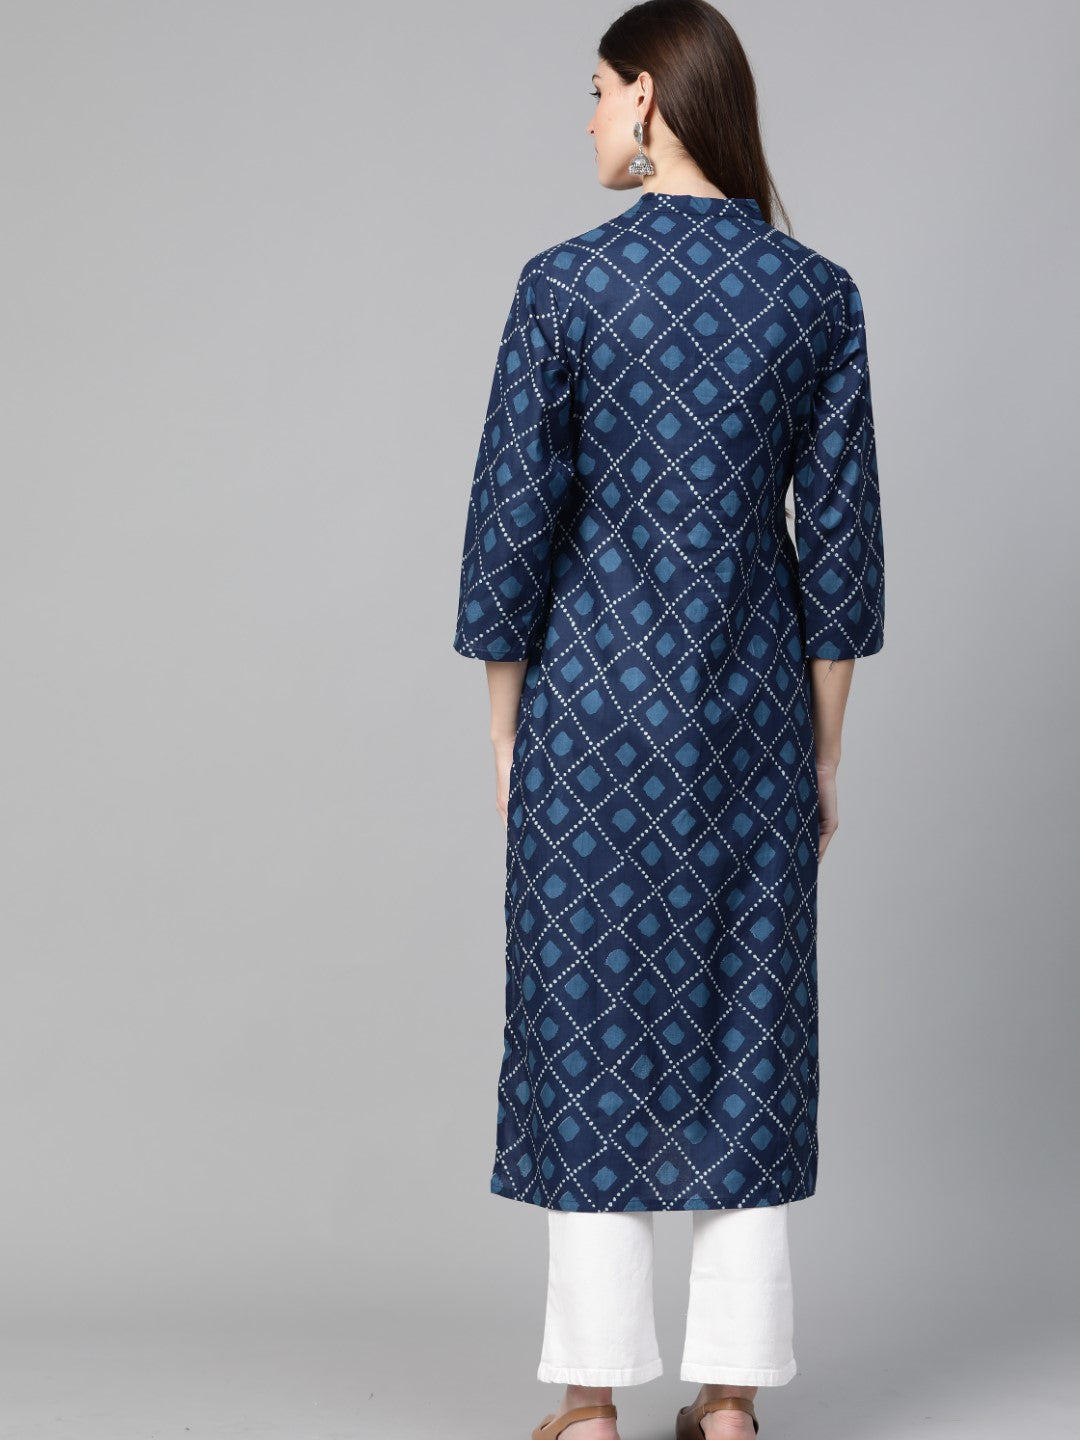 Women's Indigo Blue Straight Kurta With Lace Detail - Bhama Couture